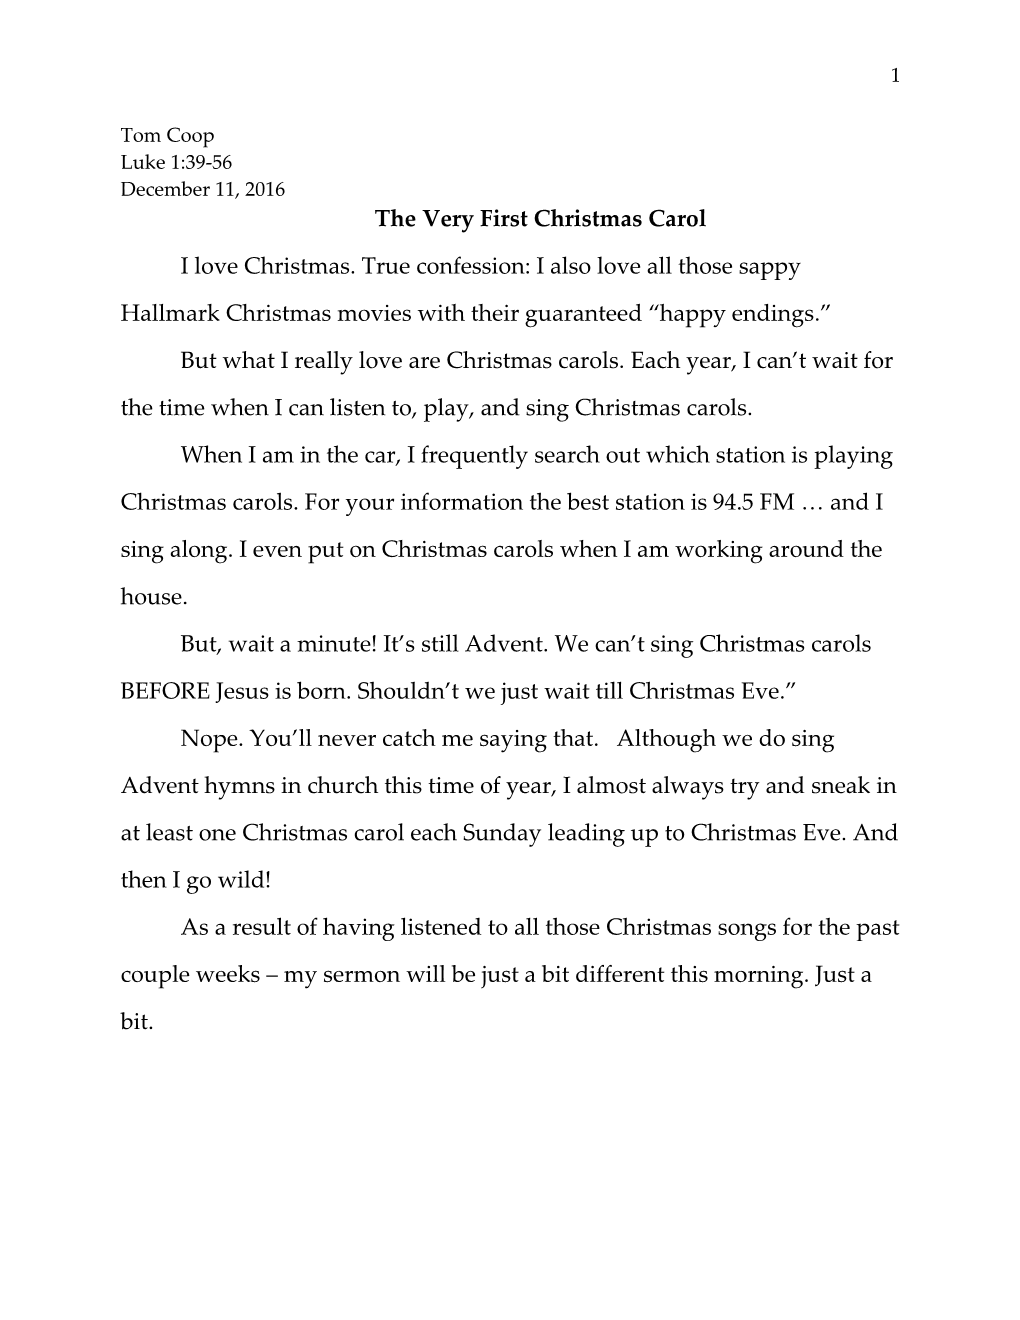 The Very First Christmas Carol I Love Christmas. True Confession: I Also